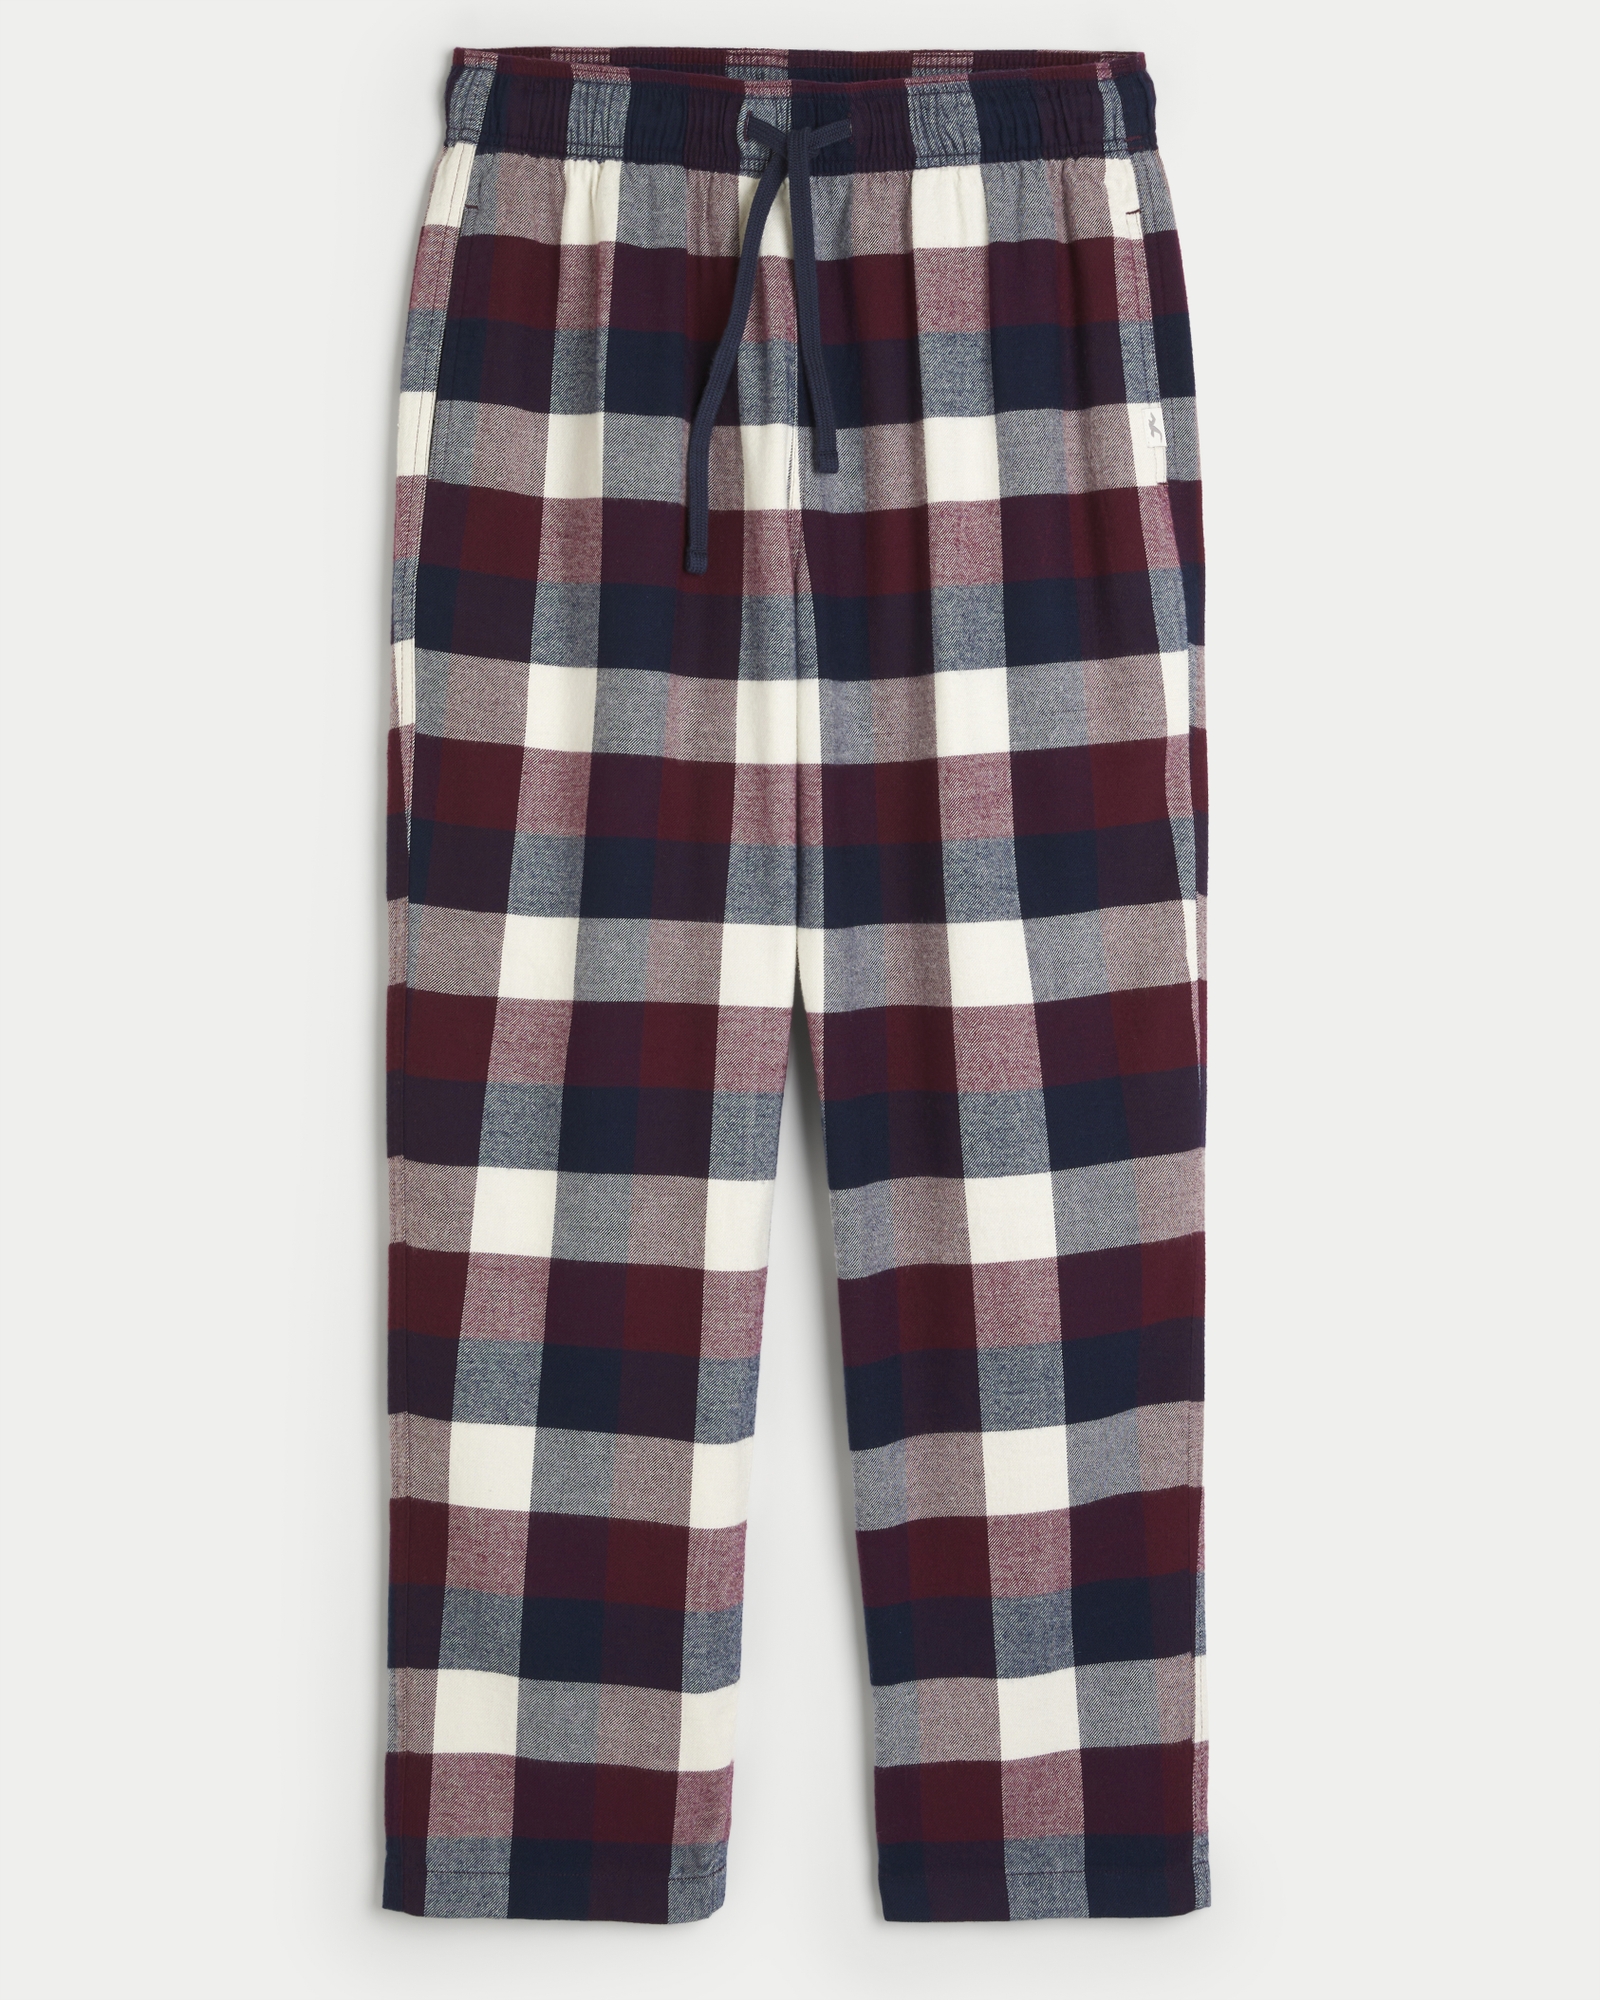 Hollister Flannel Pajama Shorts